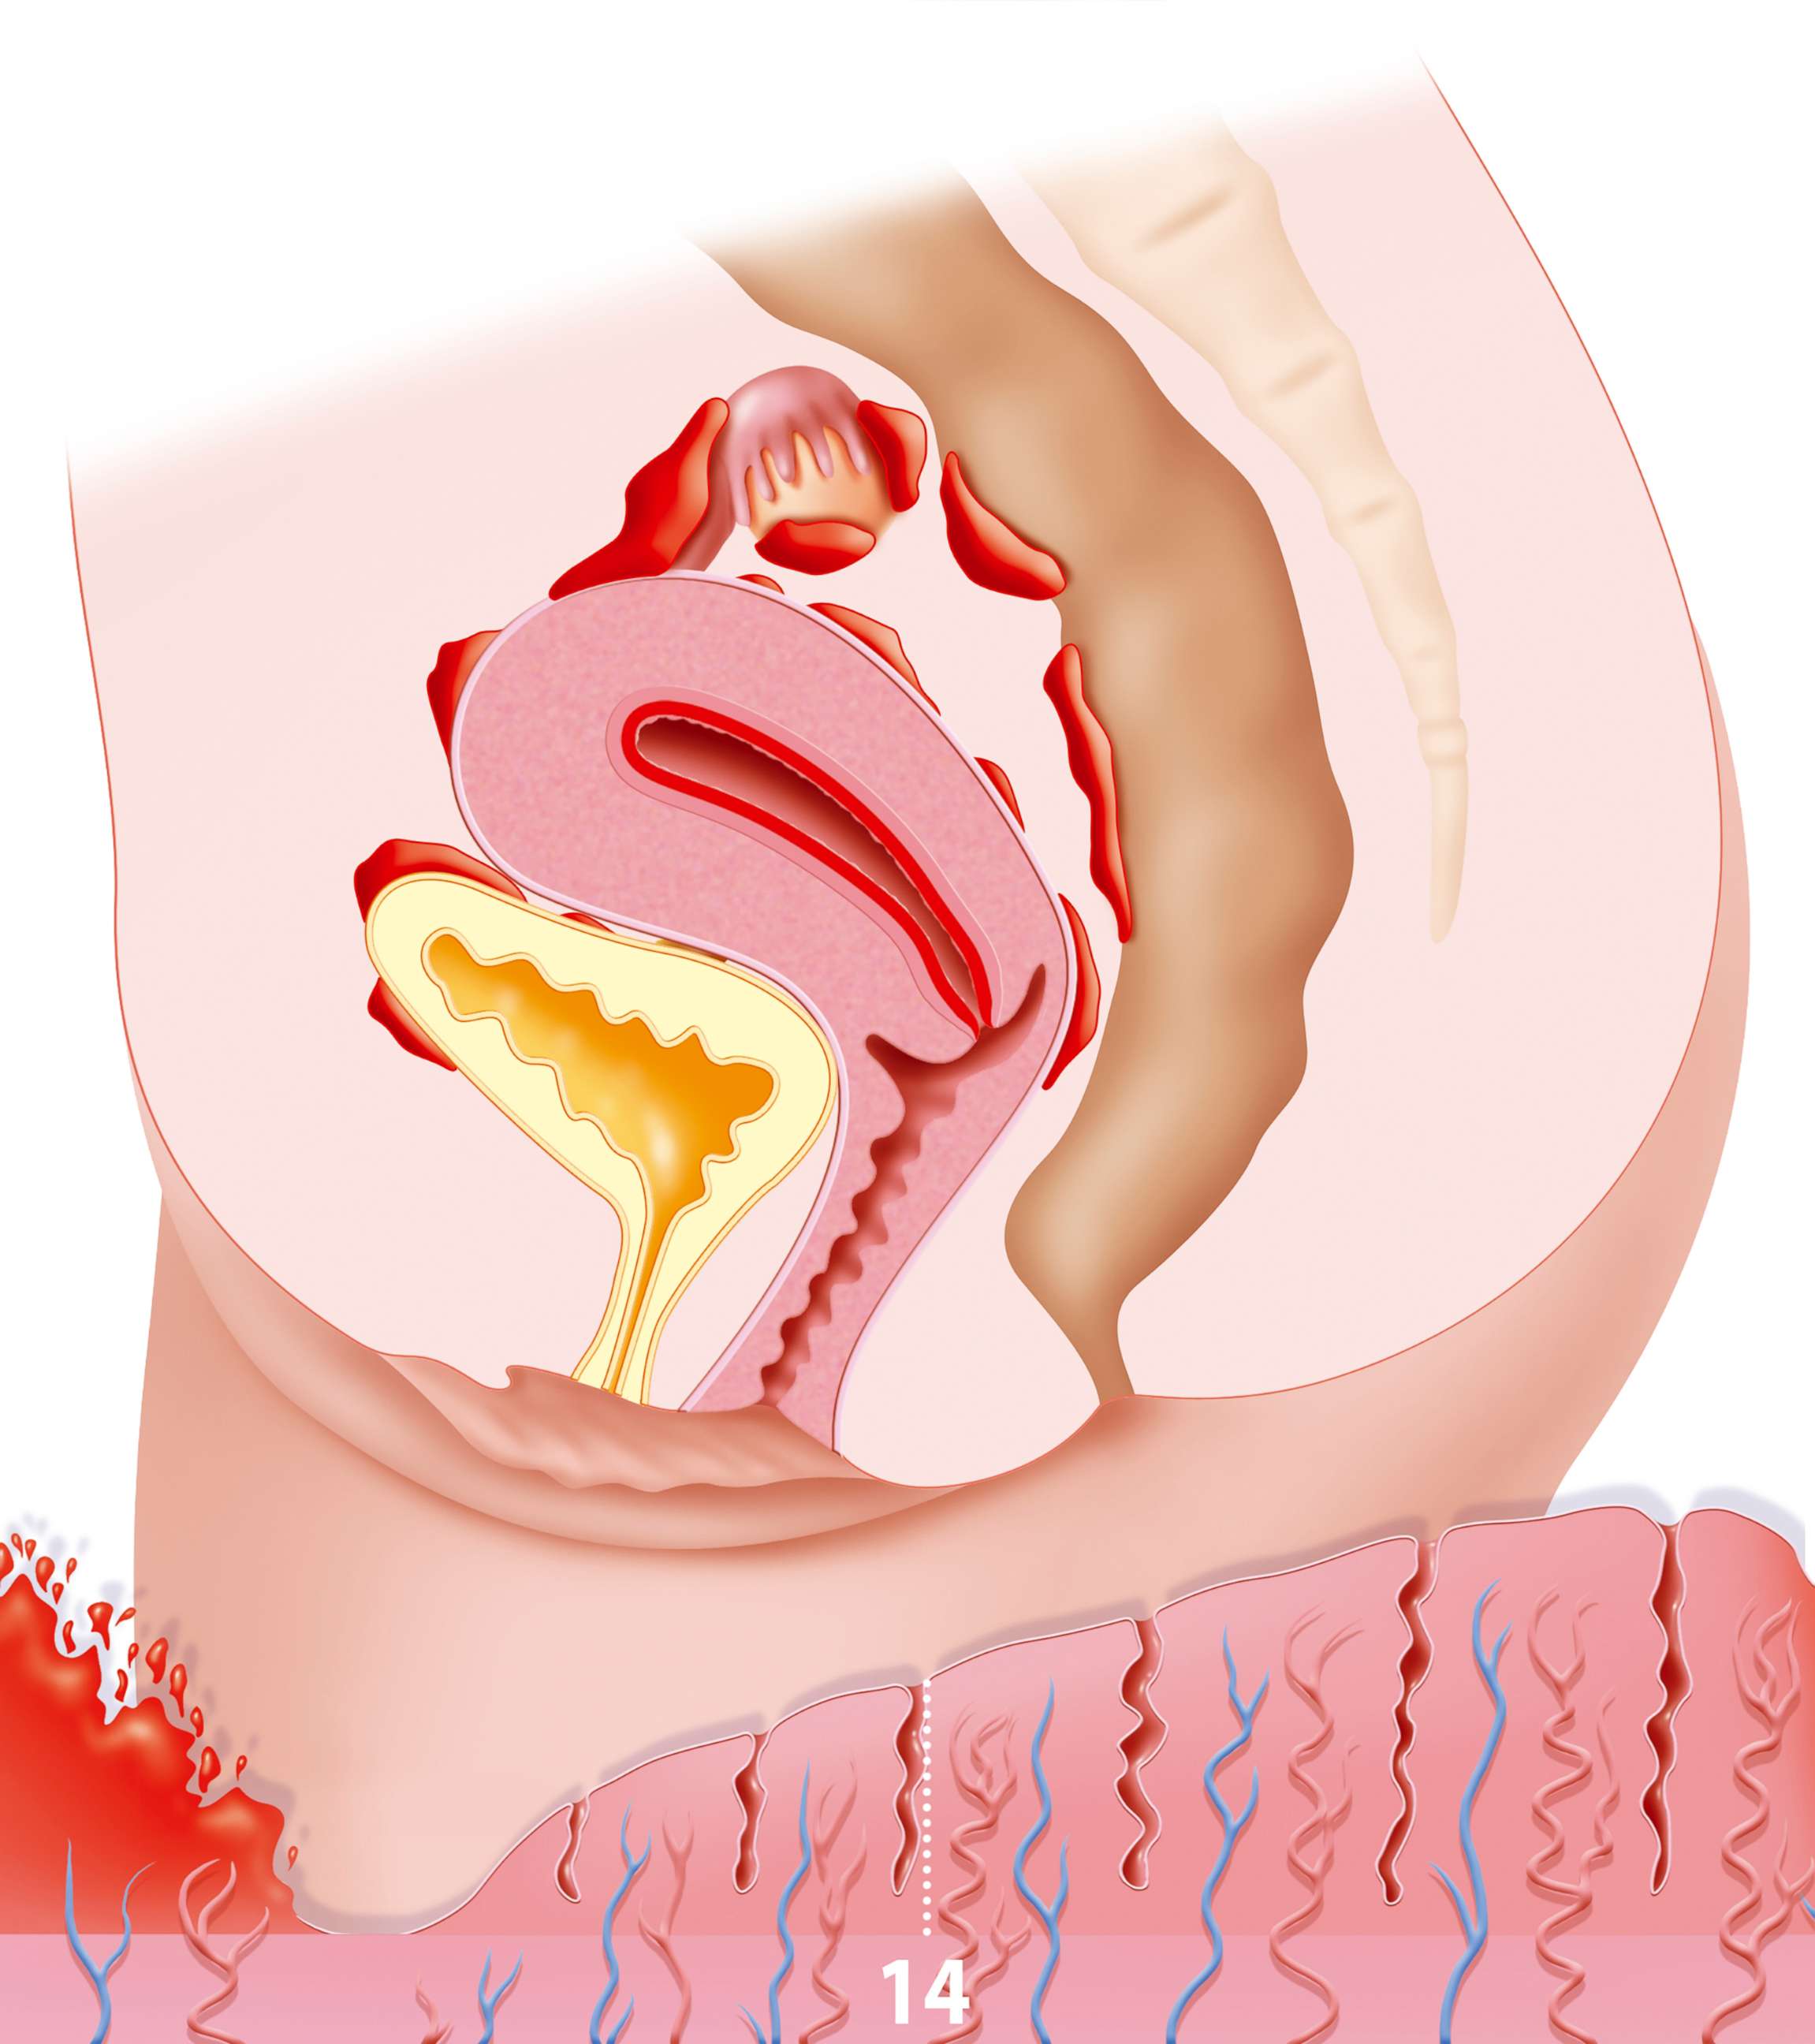 PHOTO: Endometriosis is the presence of the uterine lining outside the uterine cavity.